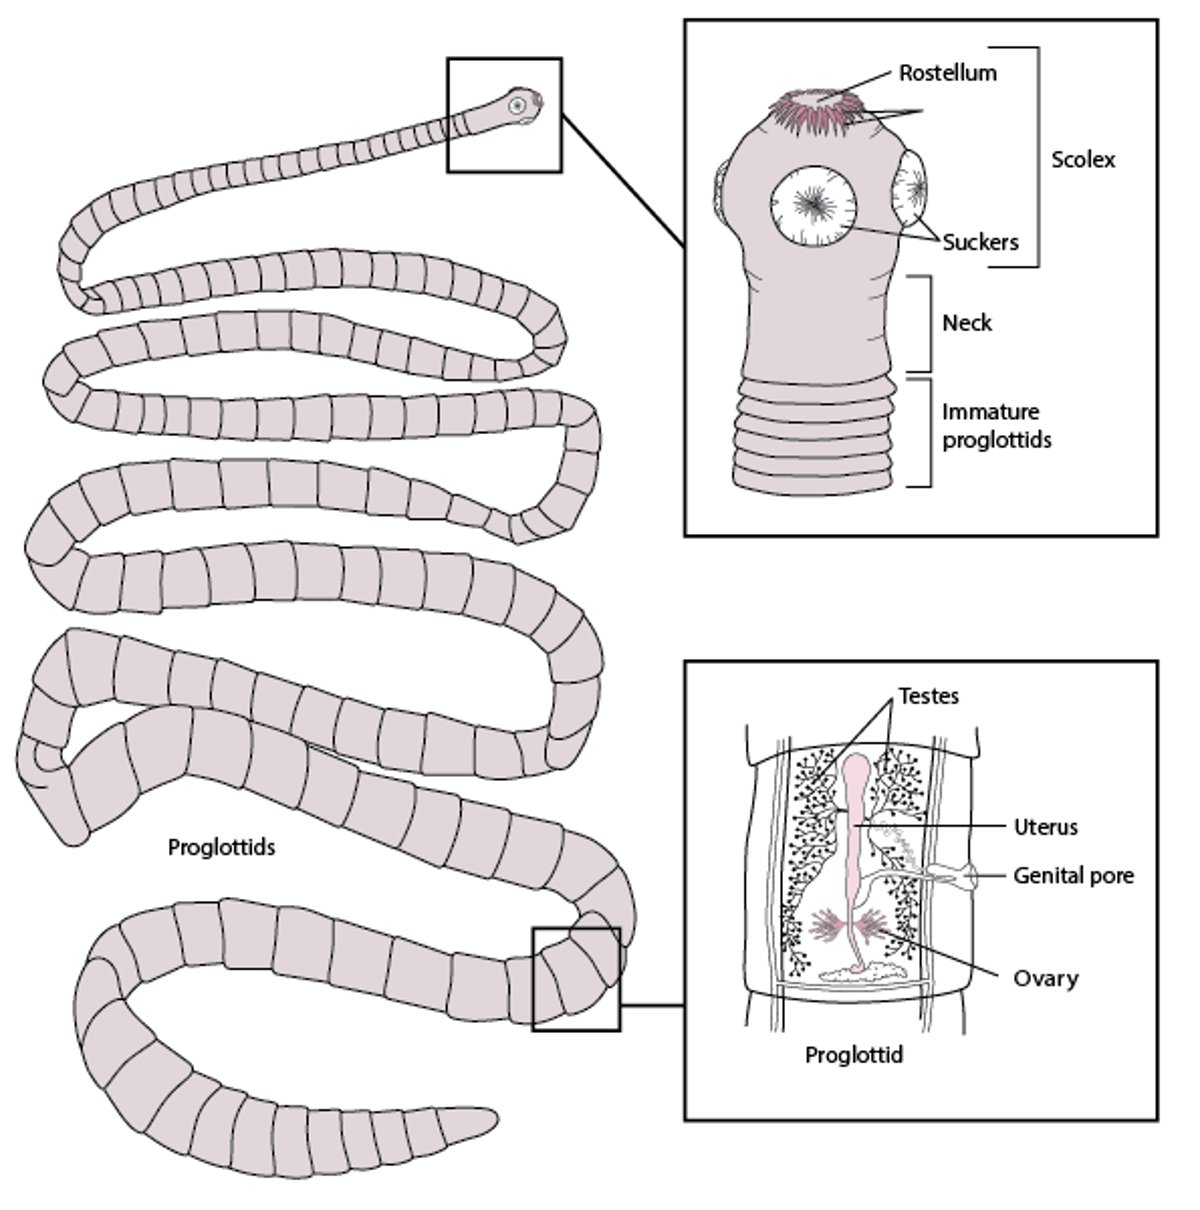 Representative Structure of a Tapeworm, Based on Taenia solium